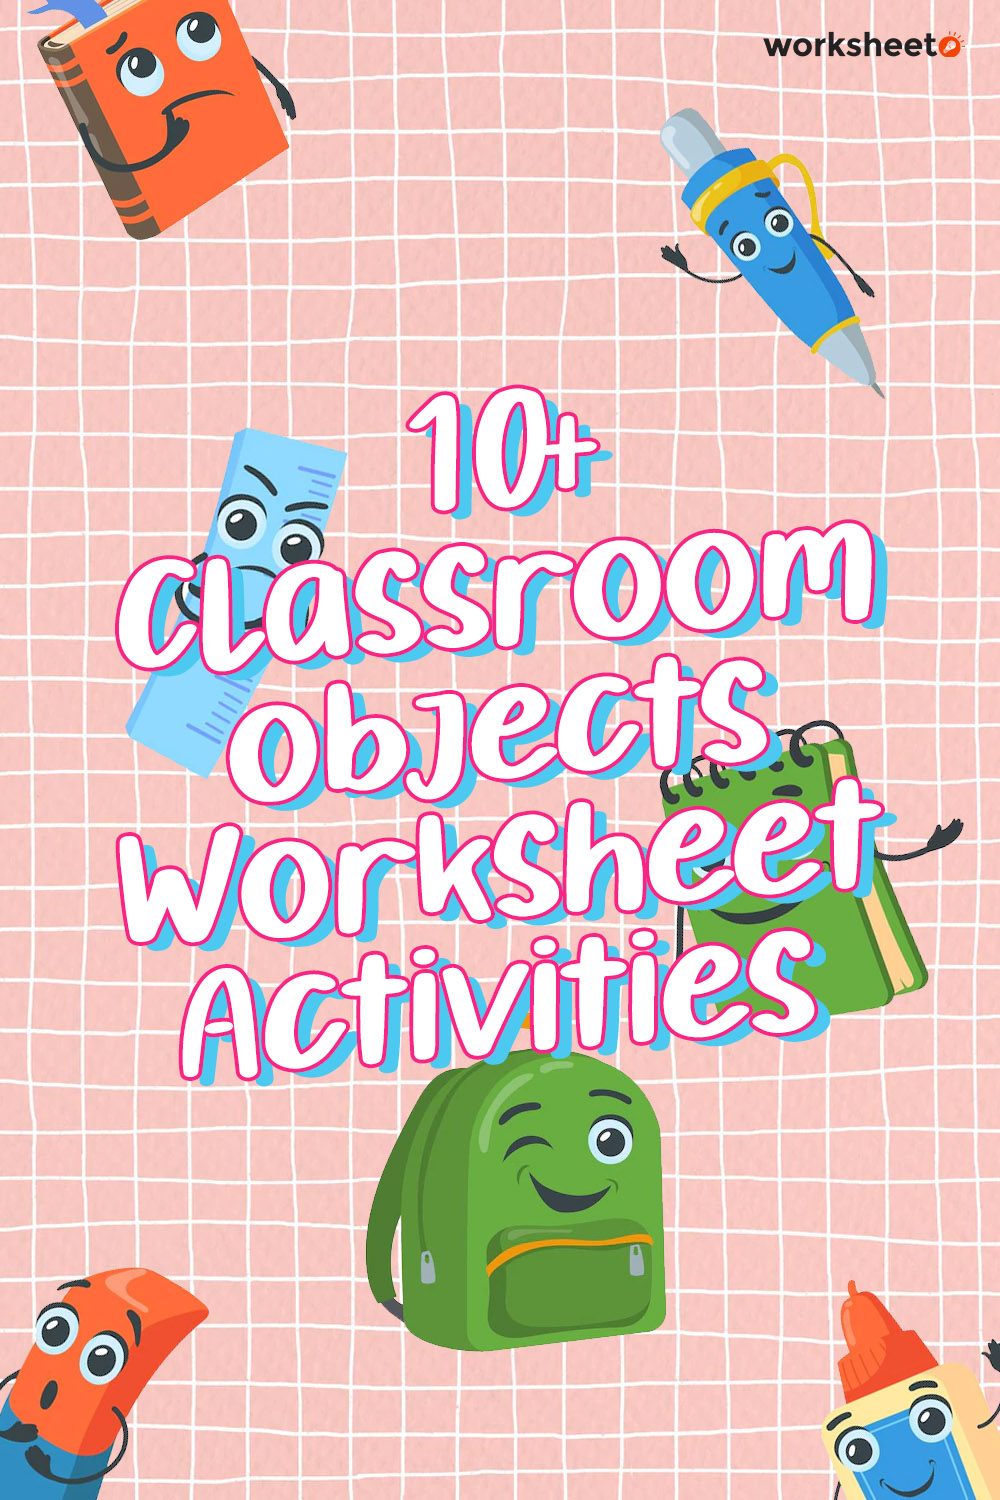 14-classroom-objects-worksheet-activities-worksheeto